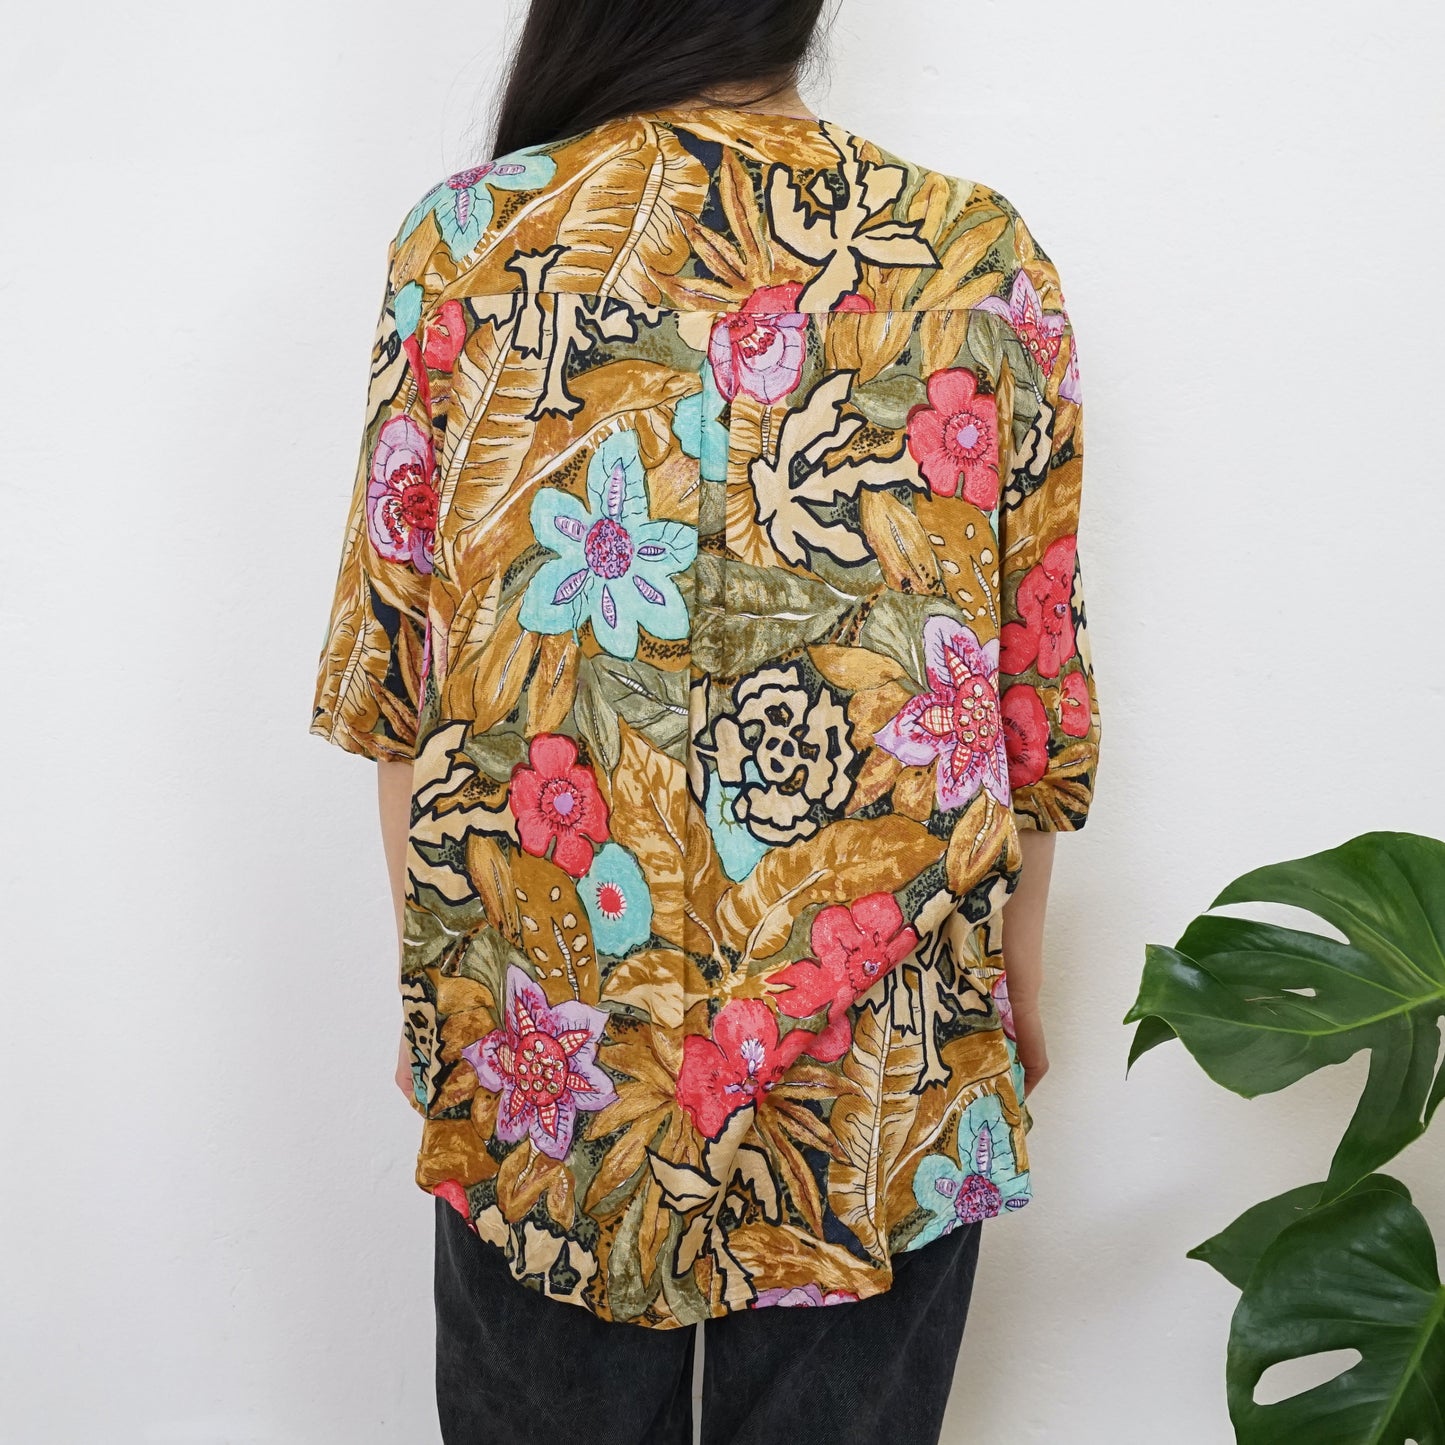 Vintage floral blouse size L-XL colorful blouse short sleeved summer blouse 90s top